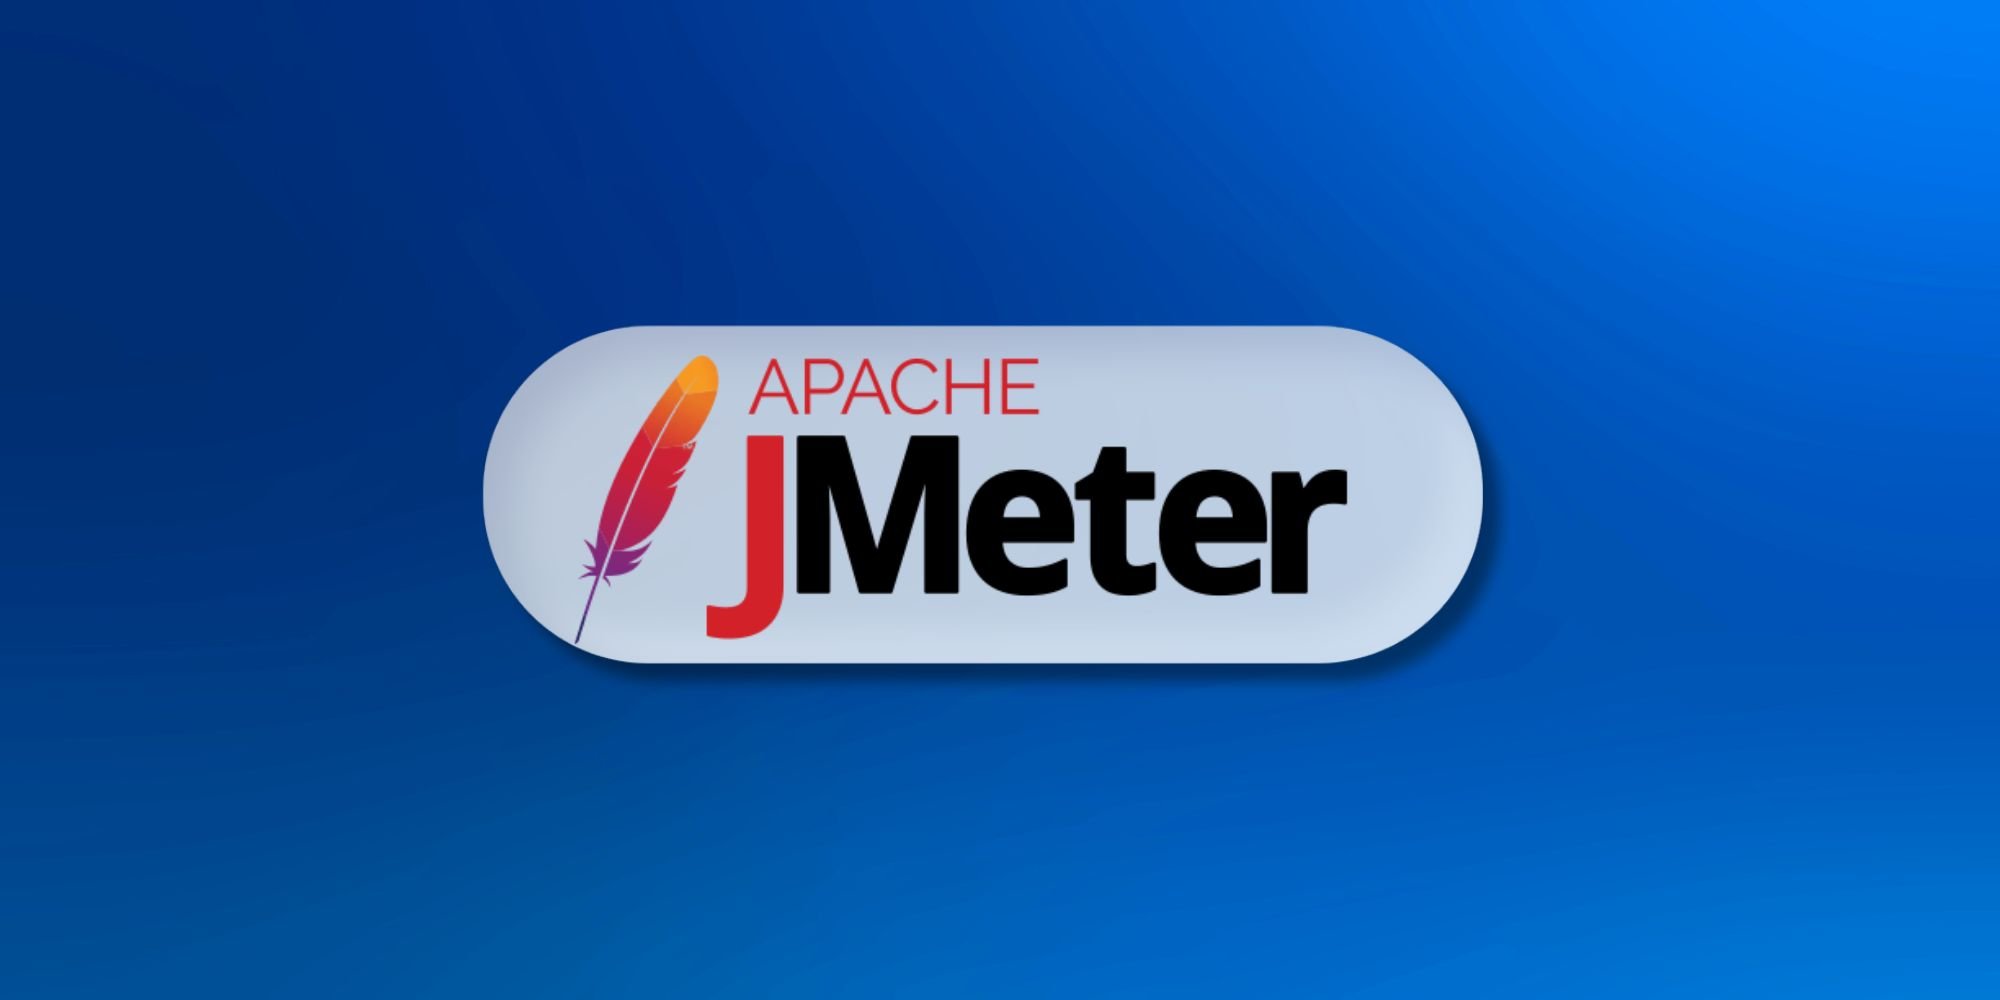 JMeter Training in Gurgaon